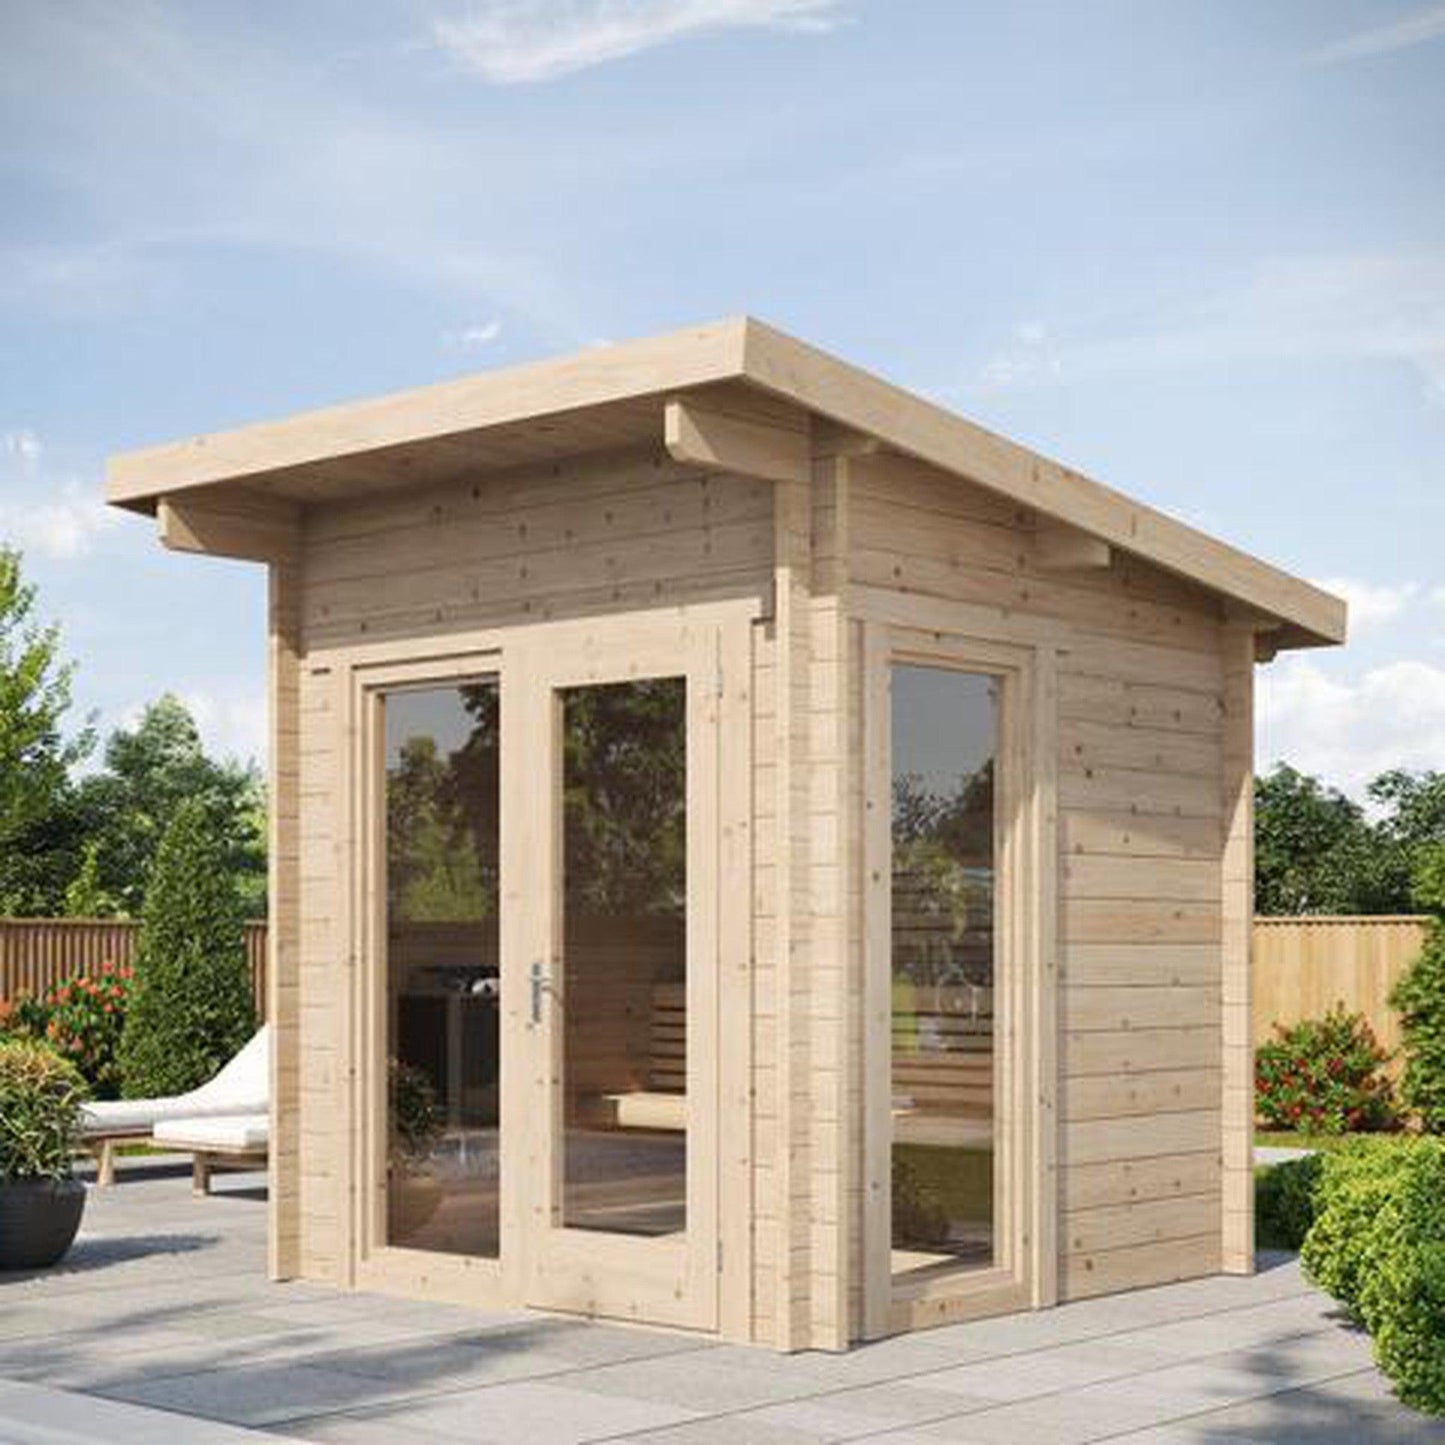 SaunaLife Garden Series Model G4 Outdoor Home Sauna Kit (Up to 6 Persons)